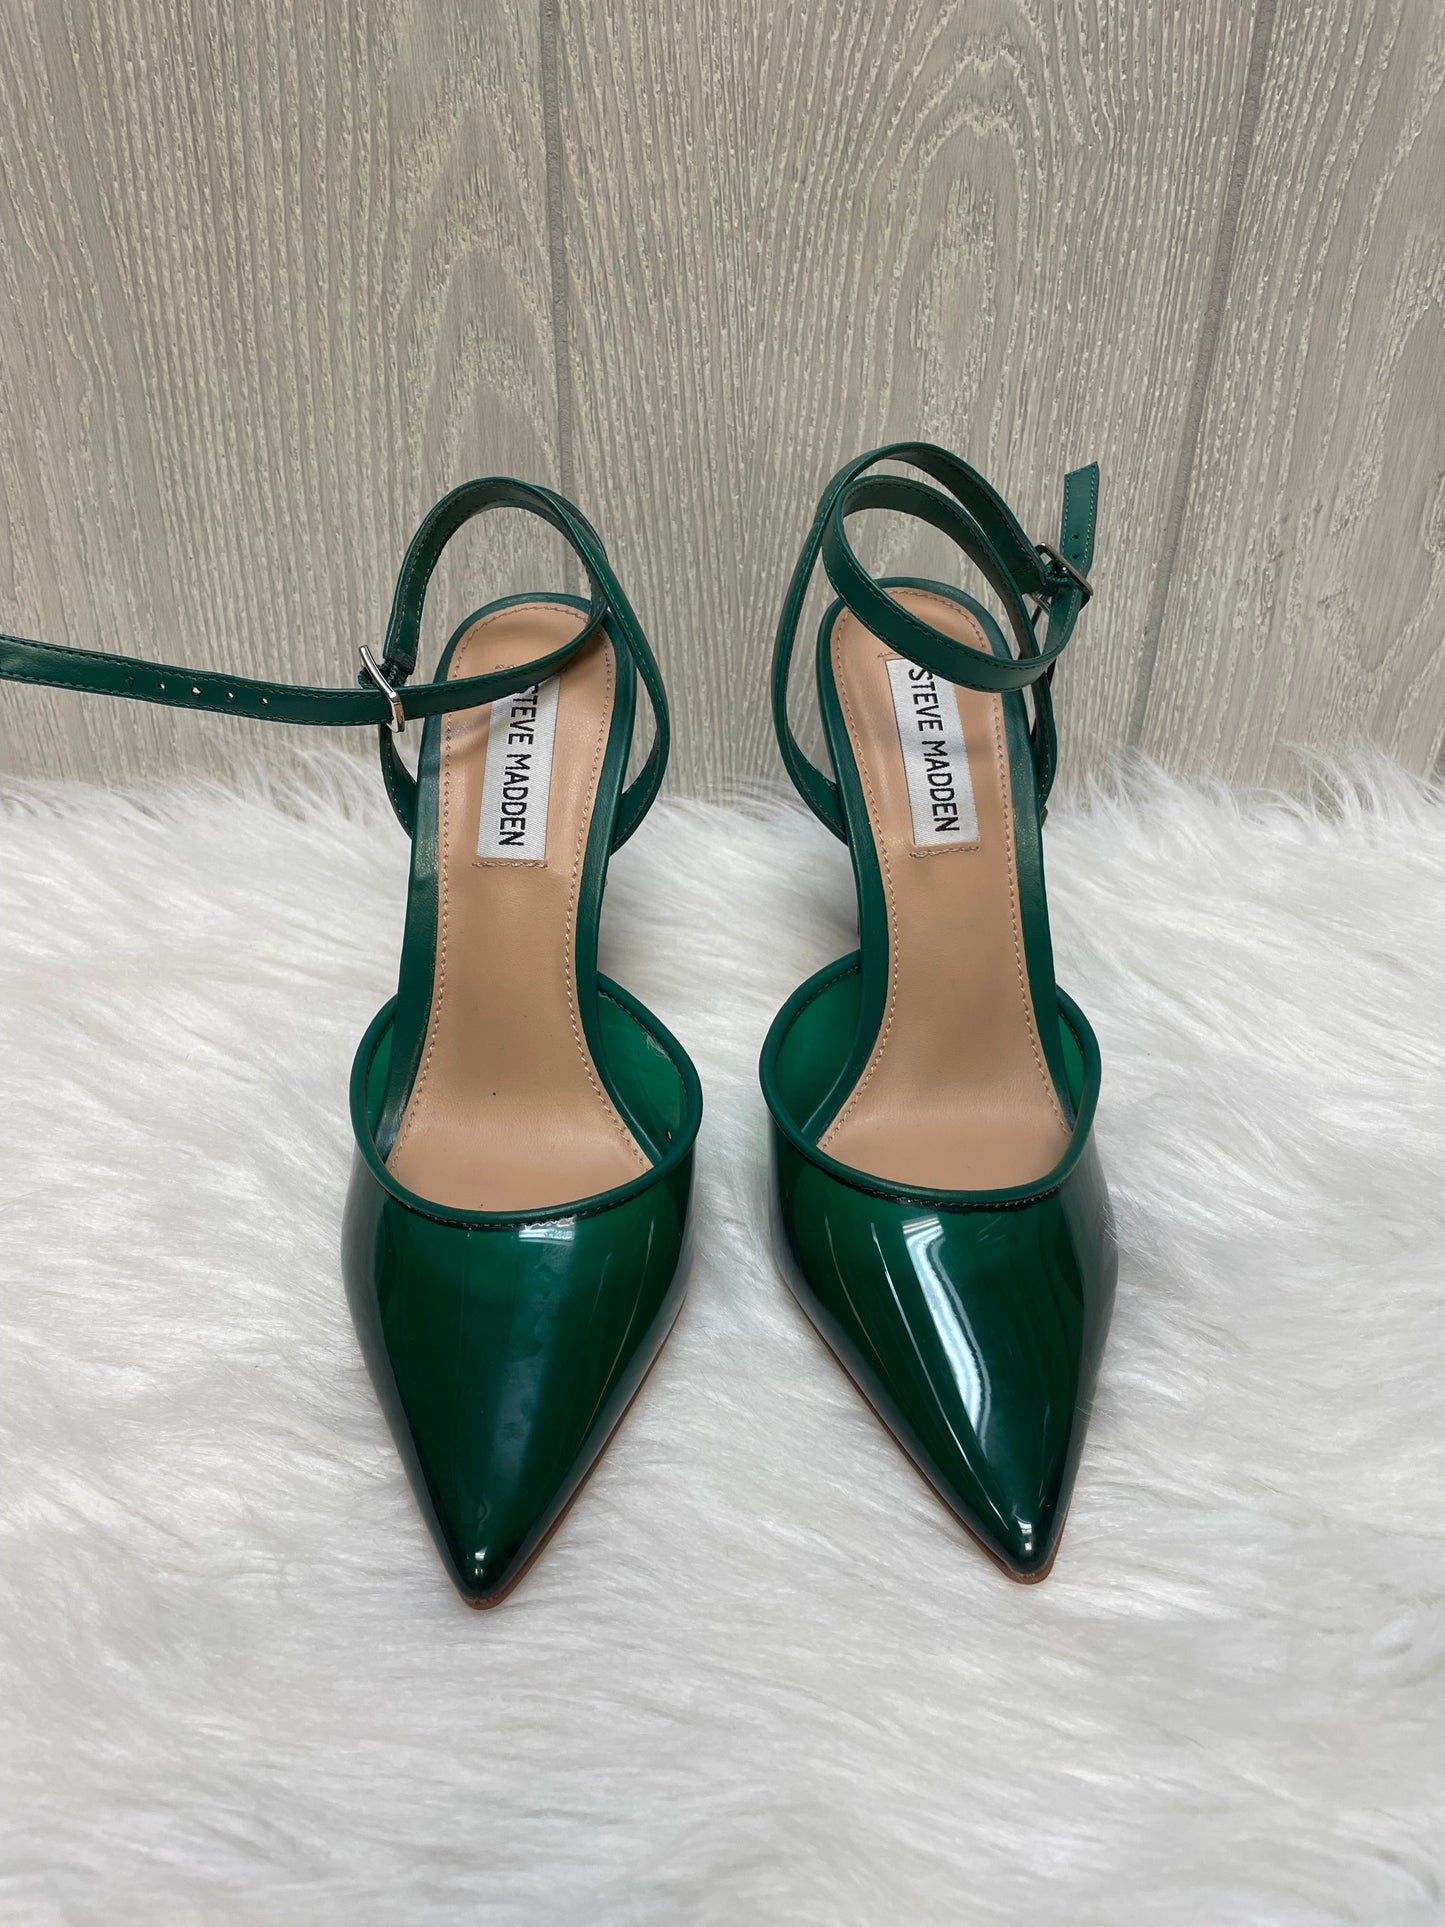 Green Shoes Heels Stiletto Steve Madden, Size 7